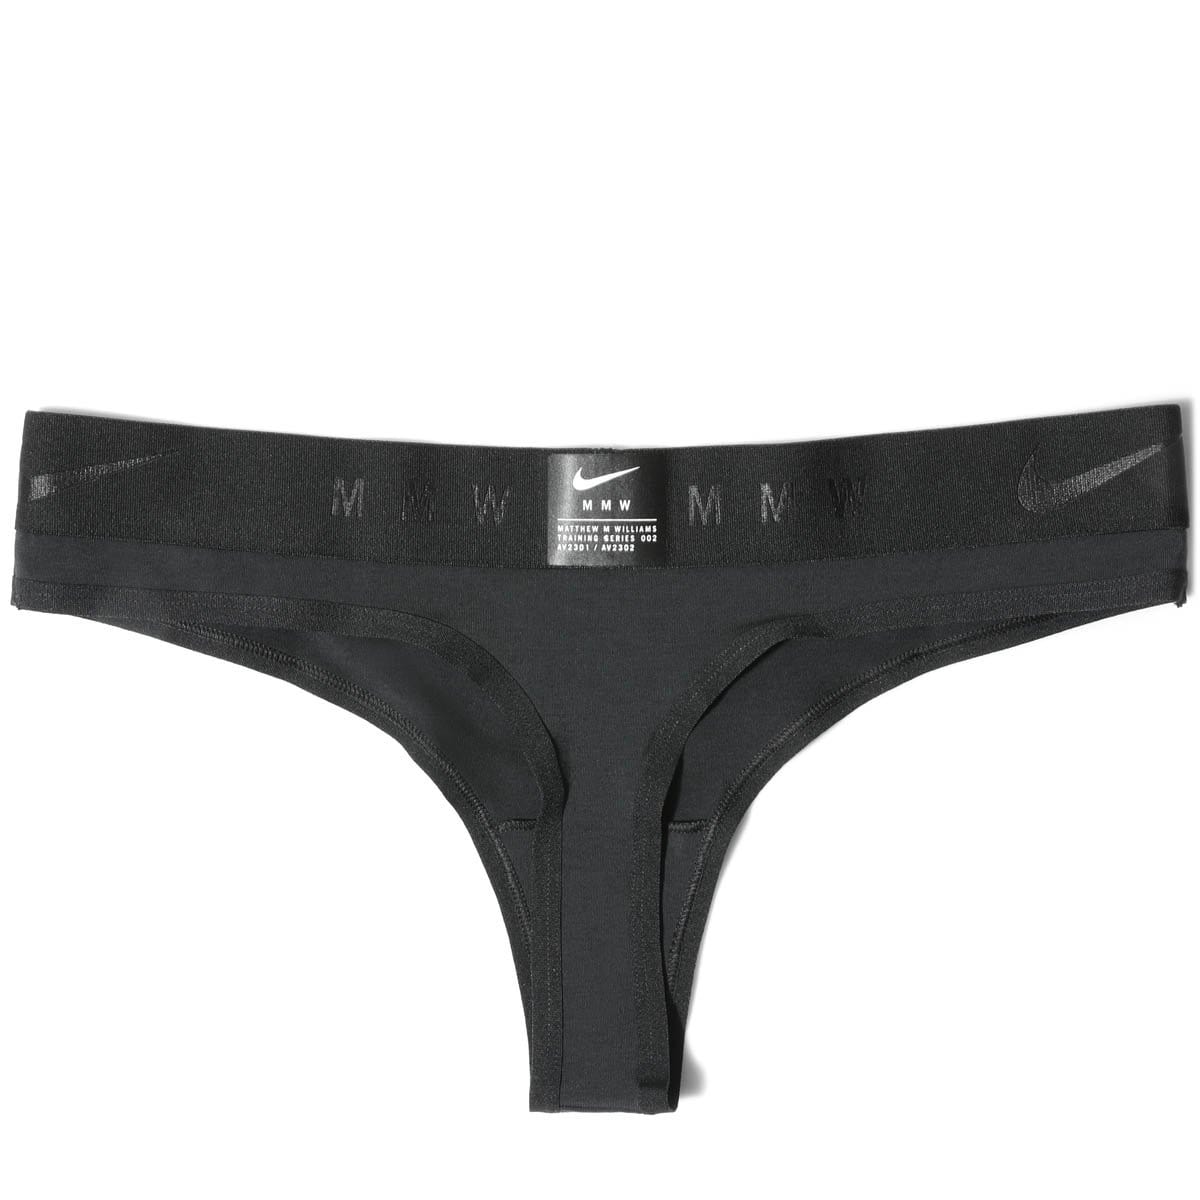 nike underwear for ladies